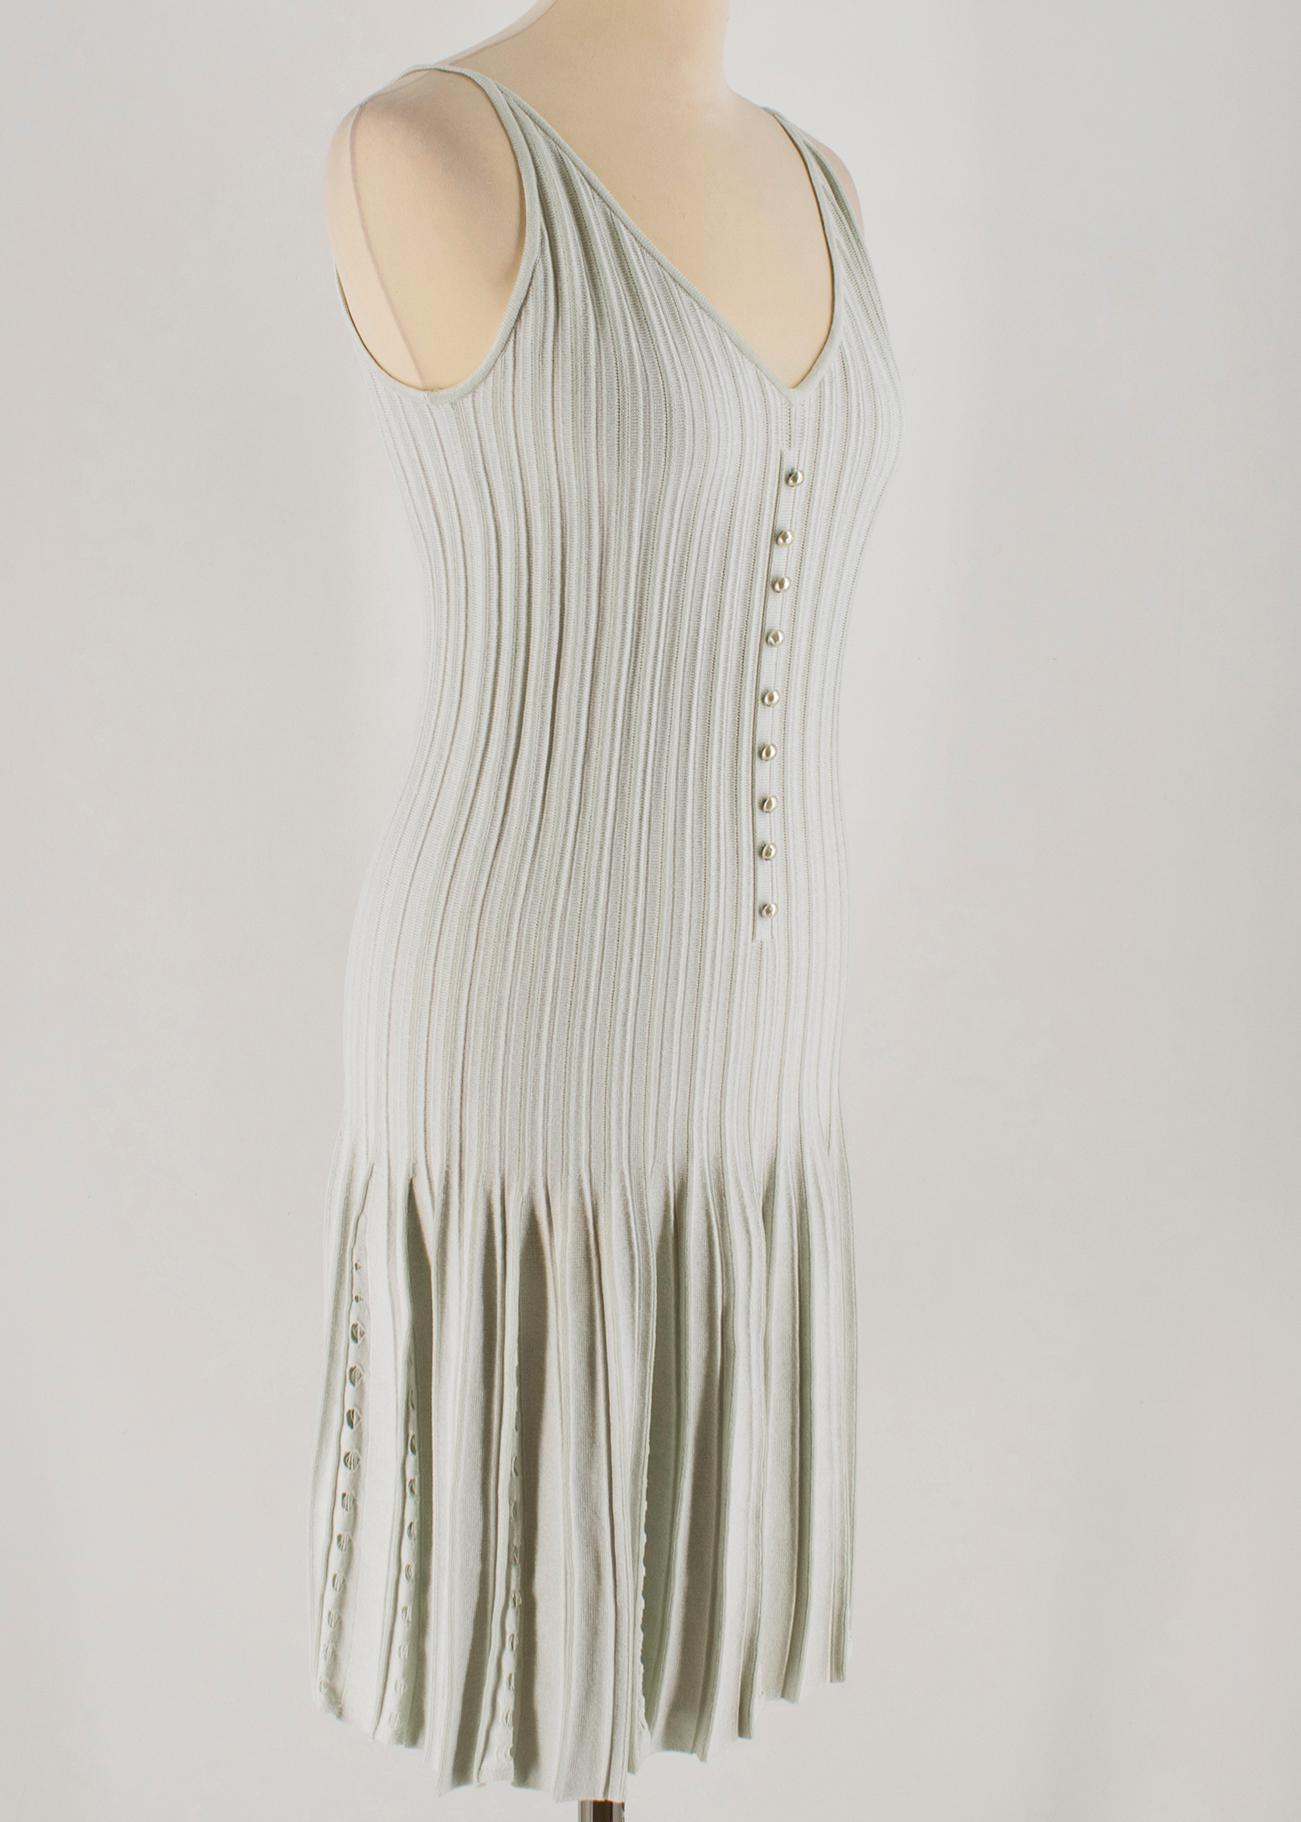 Gray Chanel Cotton-Knit Mint Dress & Cardigan Set SIZE 34 FR